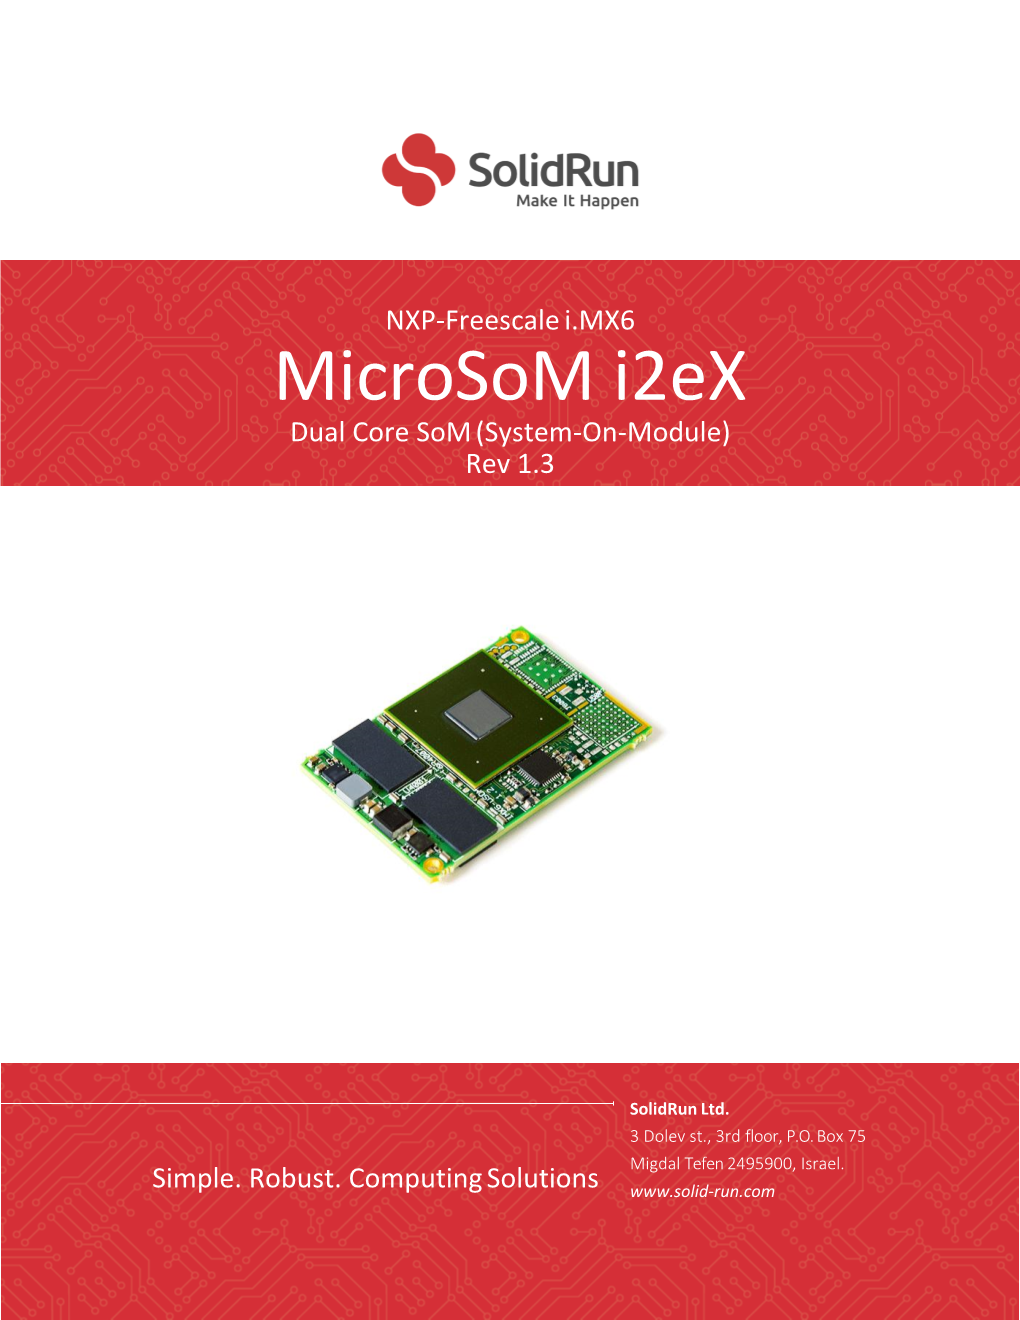 Microsom I2ex Dual Core Som (System-On-Module) Rev 1.3